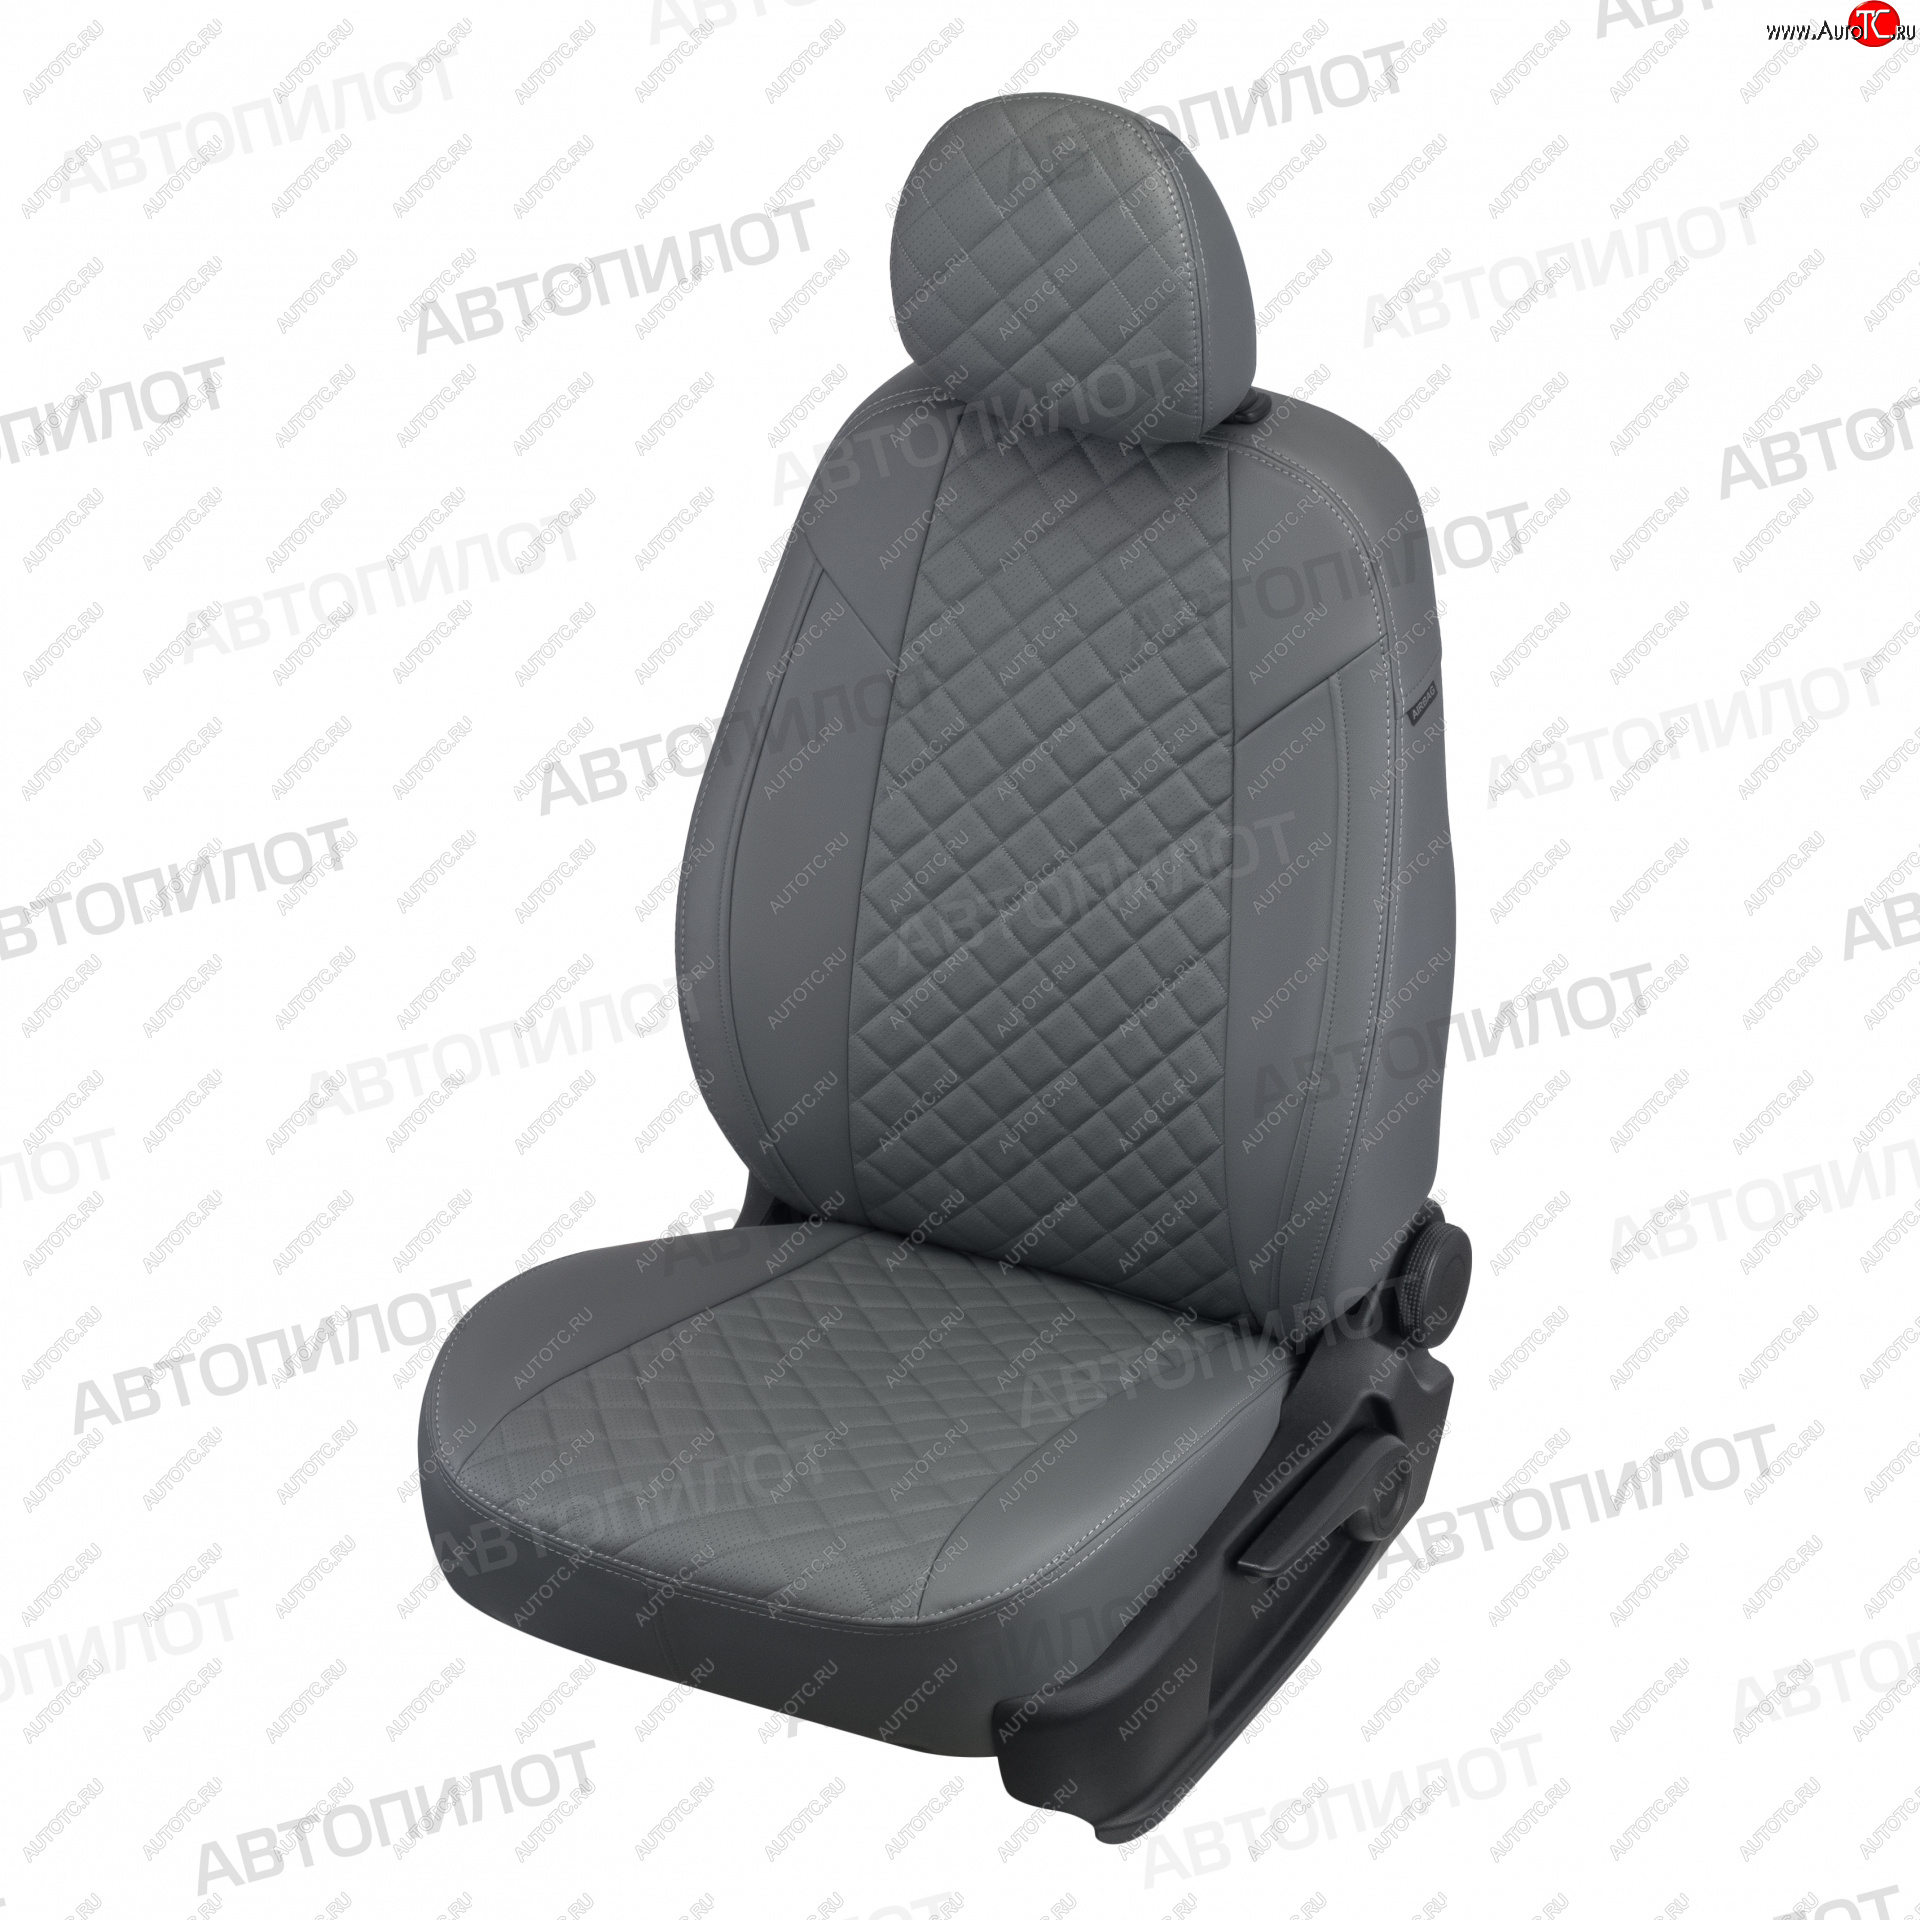 13 999 р. Чехлы сидений (экокожа) Автопилот Ромб  KIA Picanto  1 SA хэтчбэк 5 дв. (2003-2011) (серый)